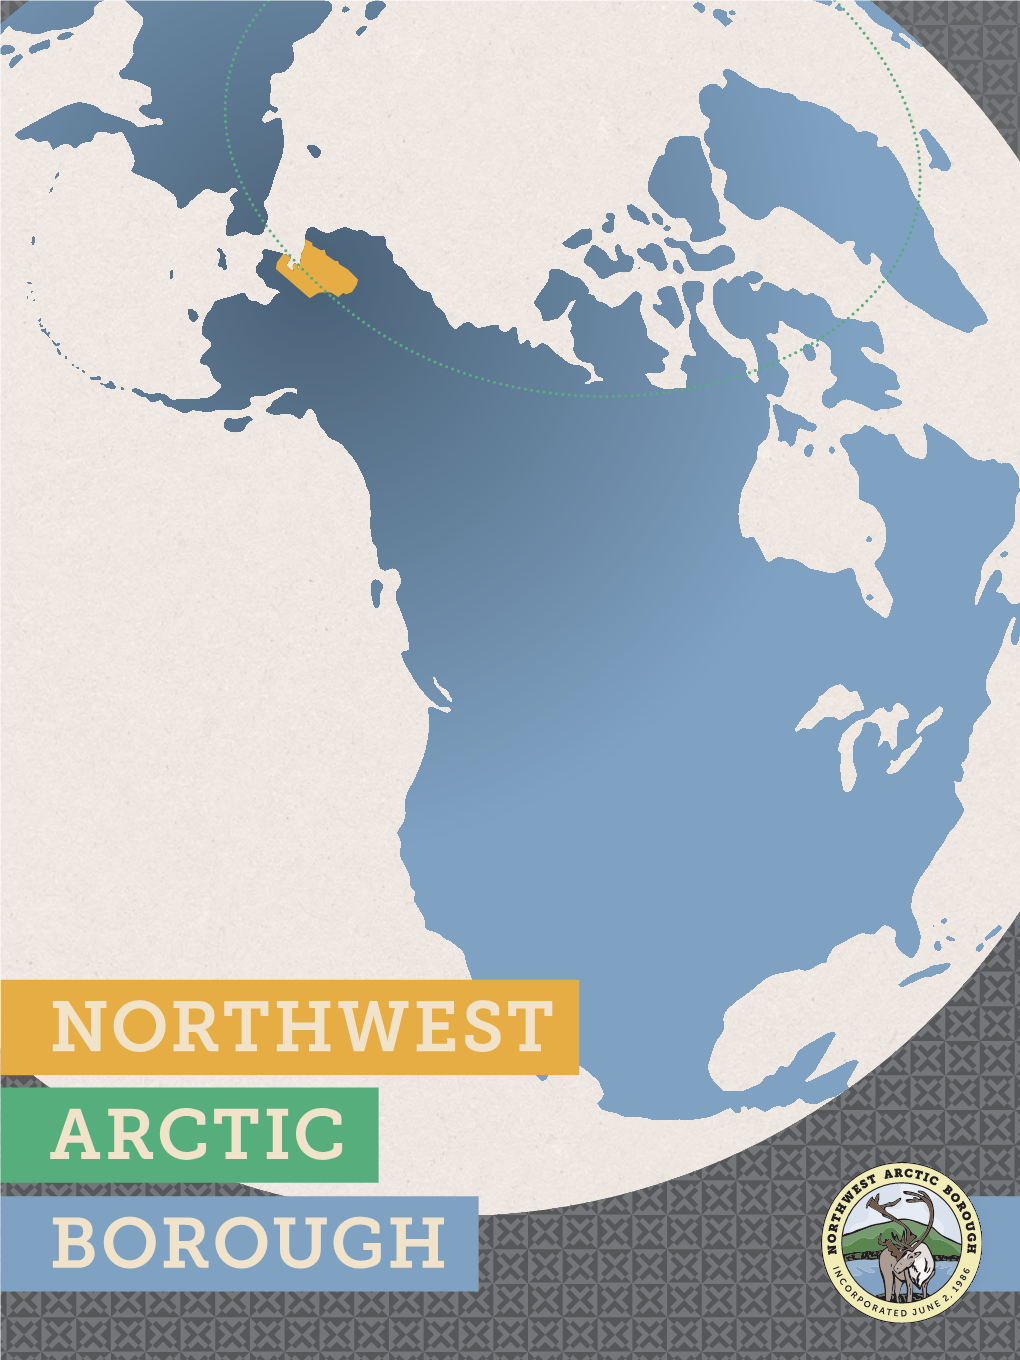 NORTHWEST ARCTIC BOROUGH Square Miles of Land (Size of Indiana) 39,000 and Water 7,791 Northwest Arctic Borough Population (2018) Kivalina Noatak